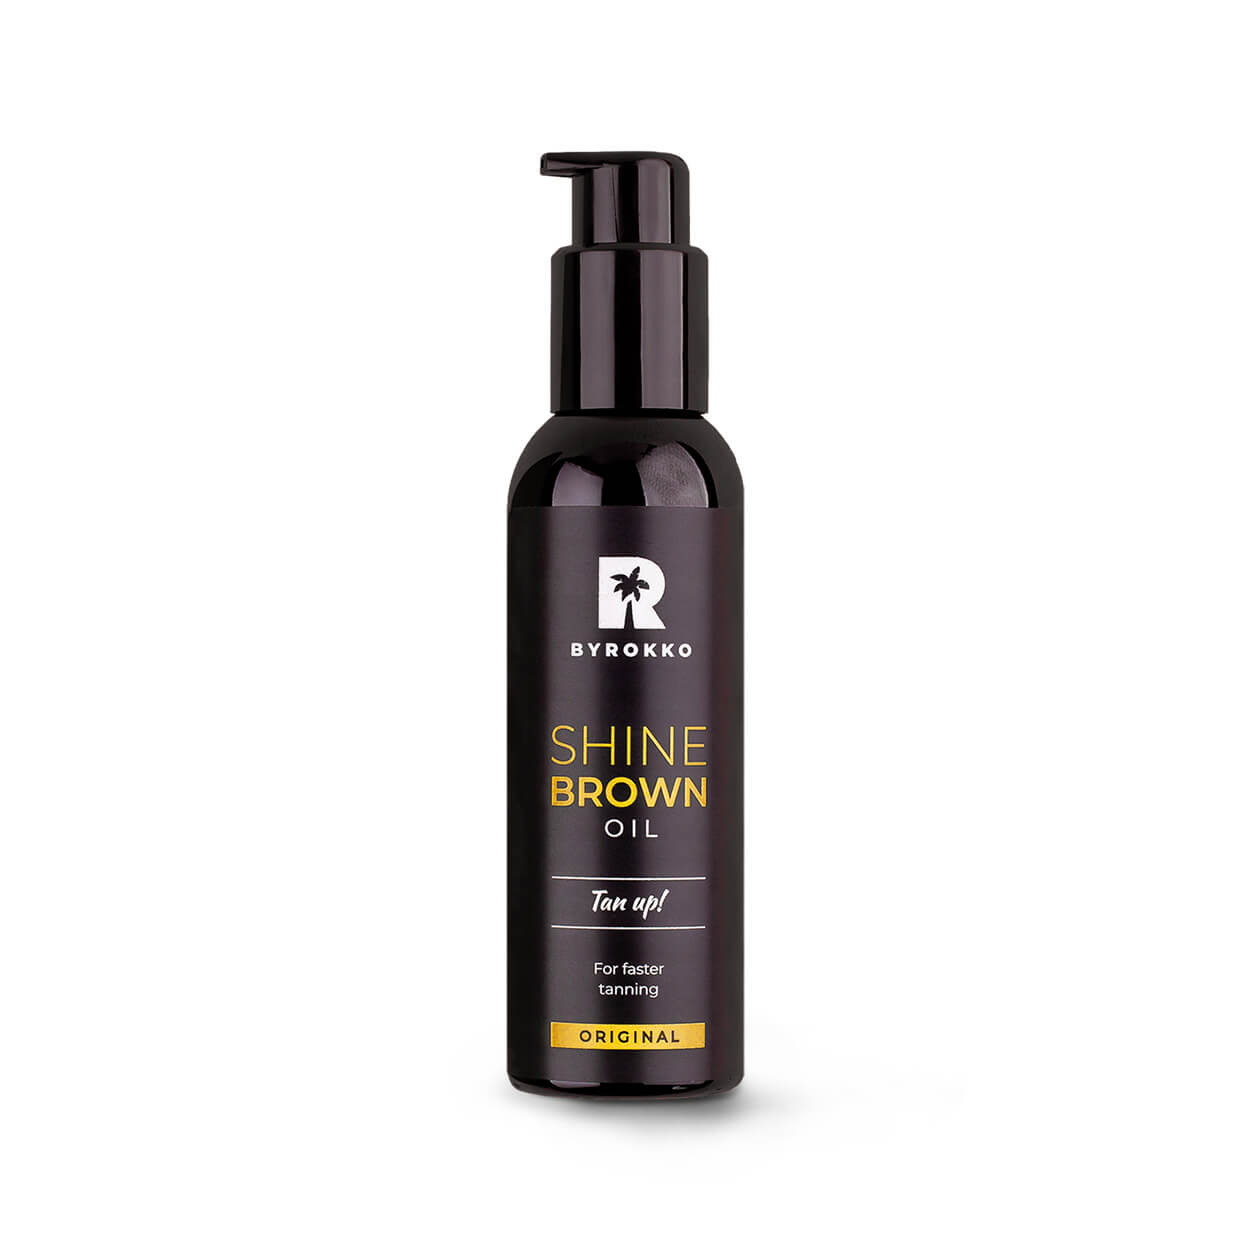 Shine brown fast tan body oil.